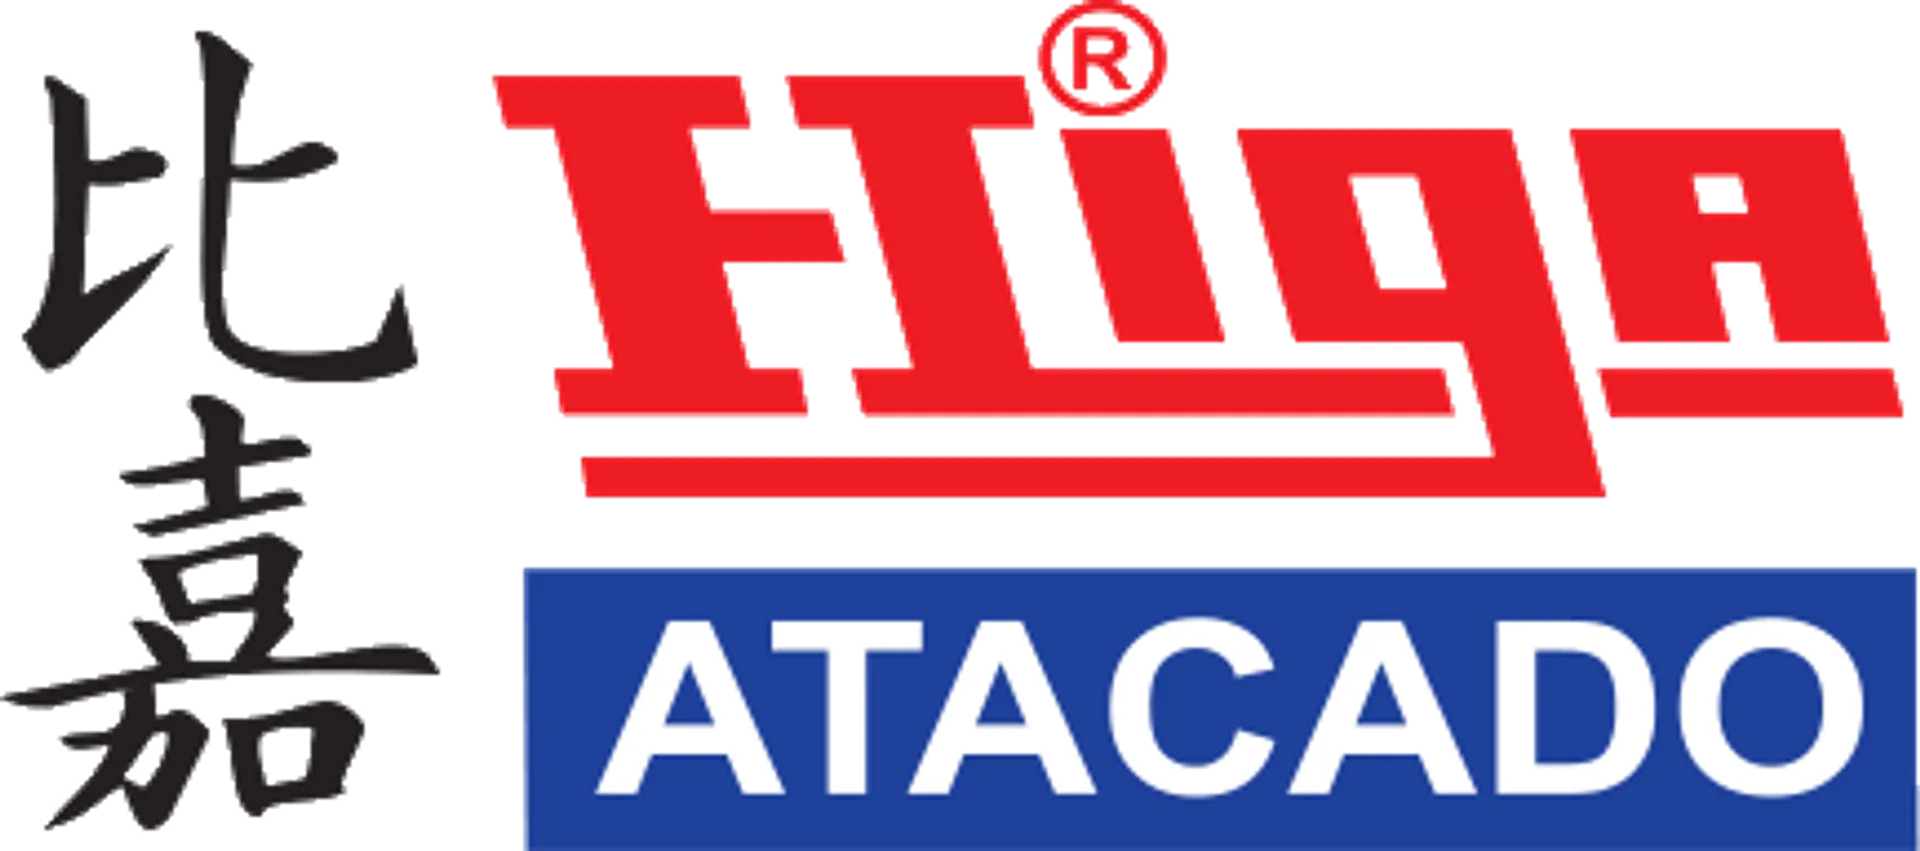 HIGA ATACADO logo de catálogo